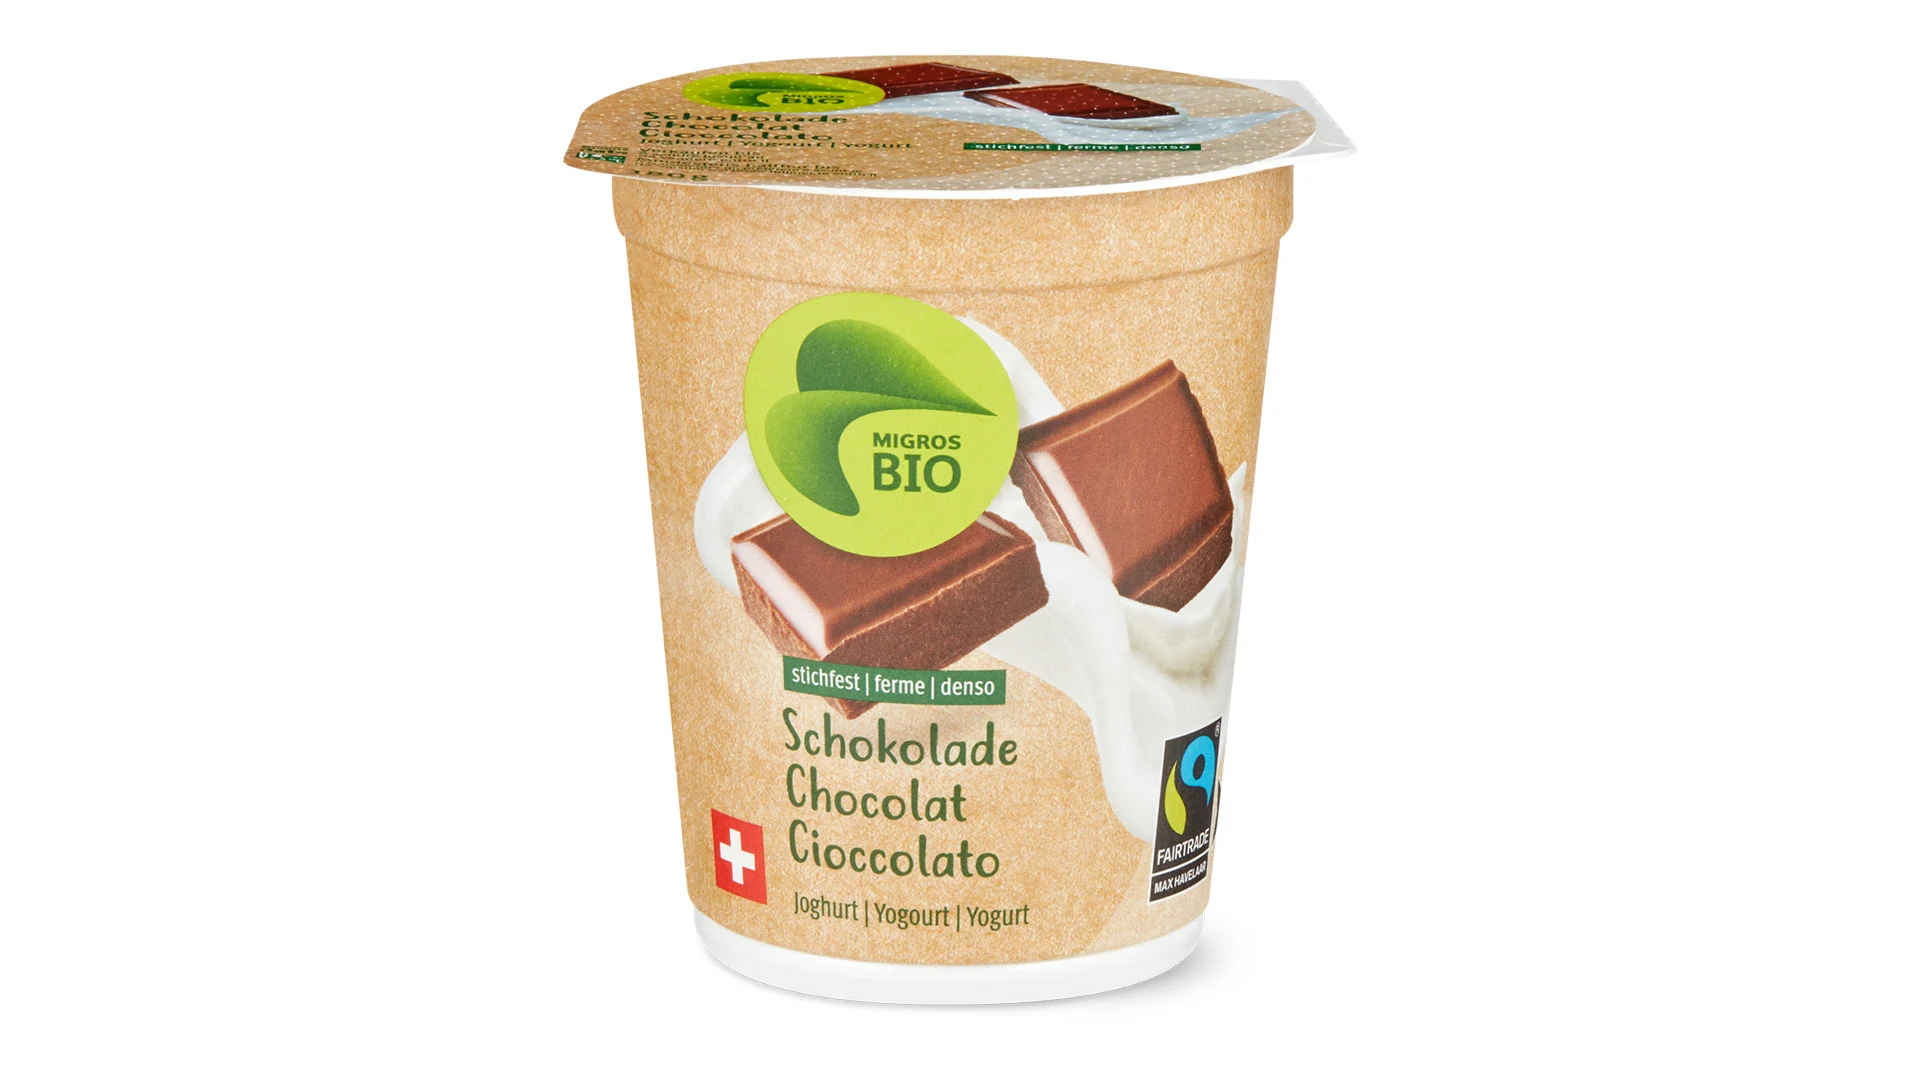 bio-fairtrade-joghurt-schokolade-header